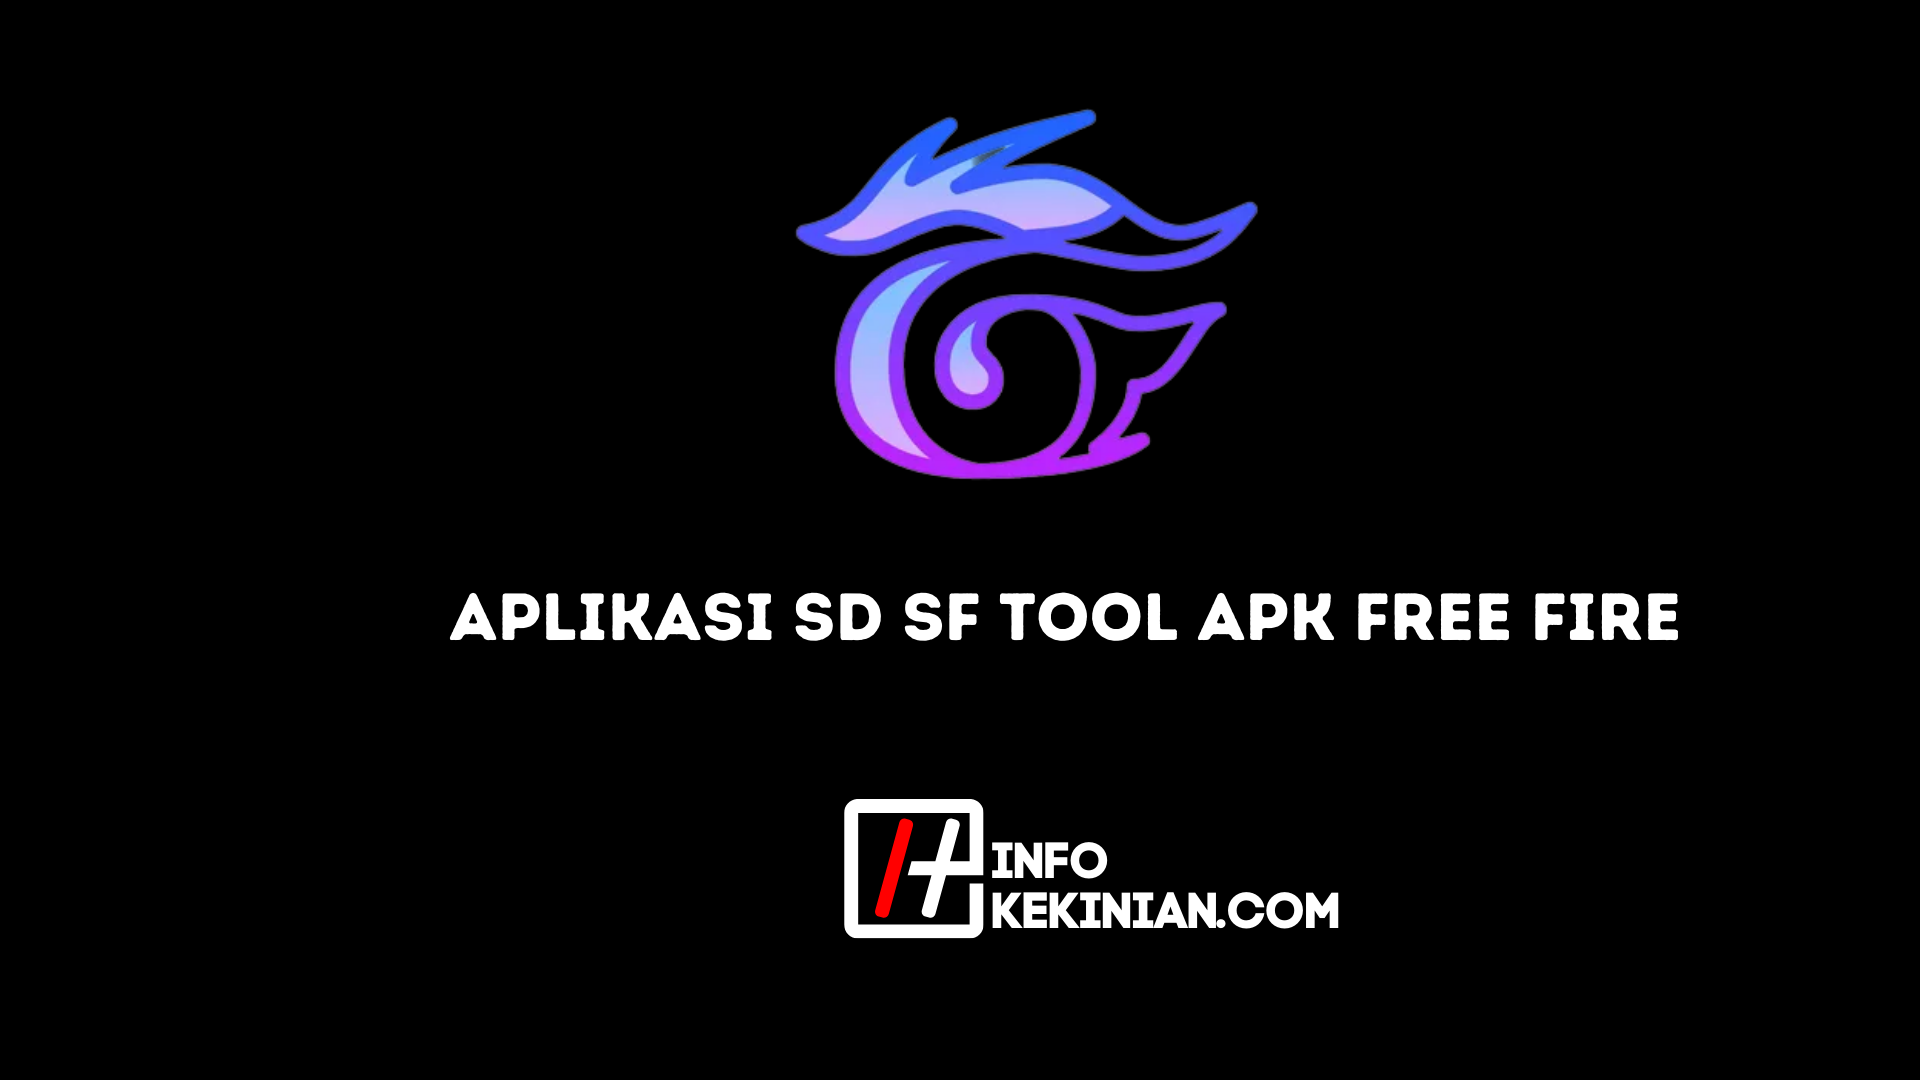 Application SD SF Tool Apk Free Fire